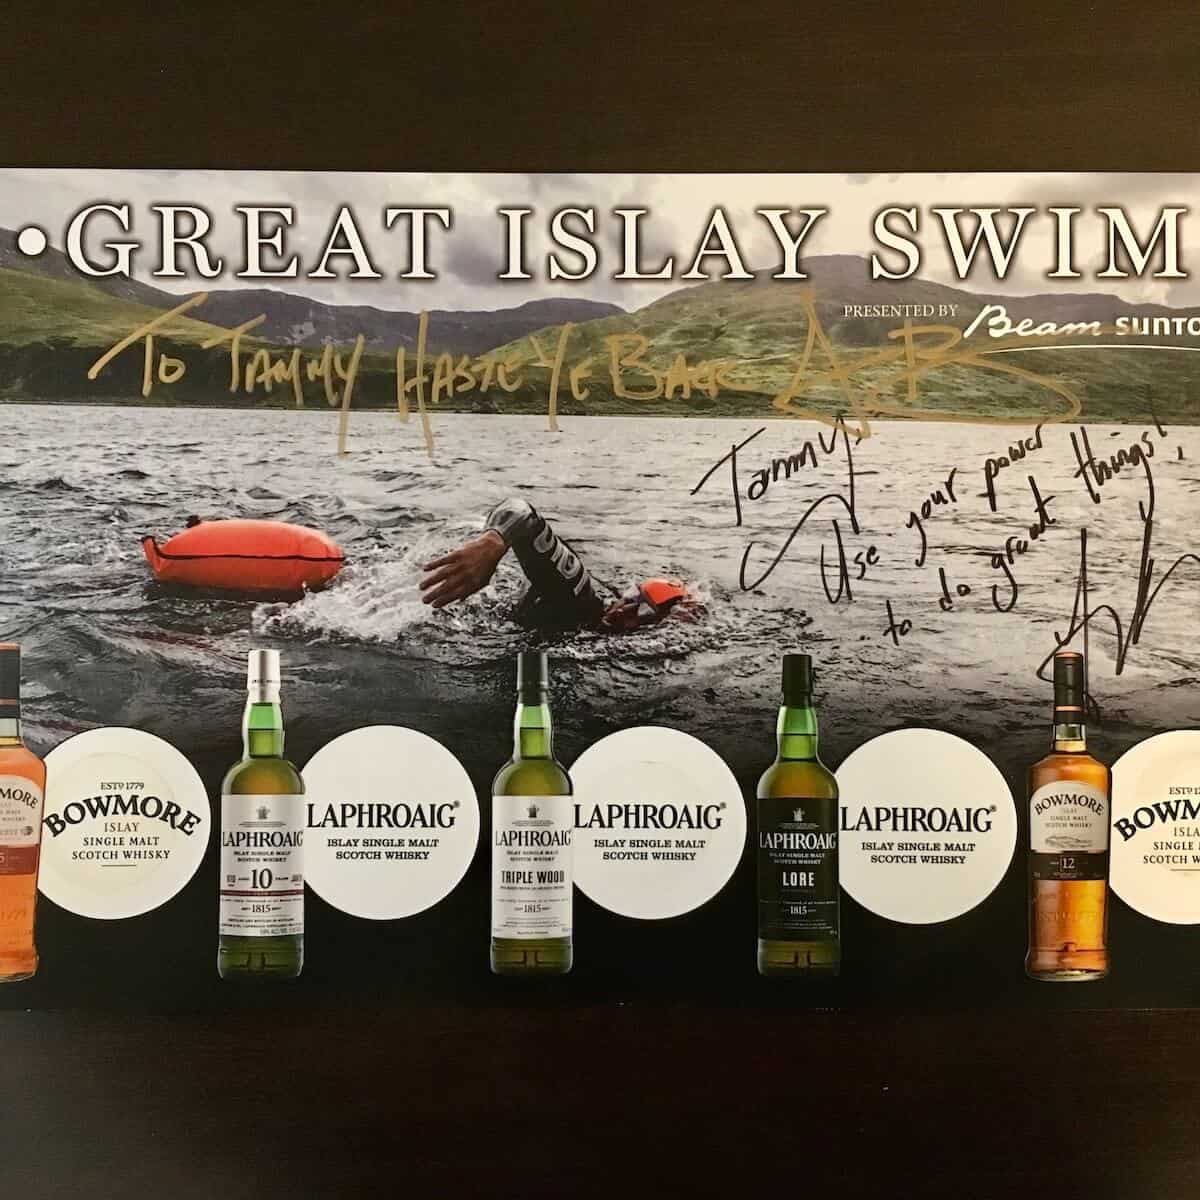 Great Islay Swim Laphroaig tasting guide autographed.